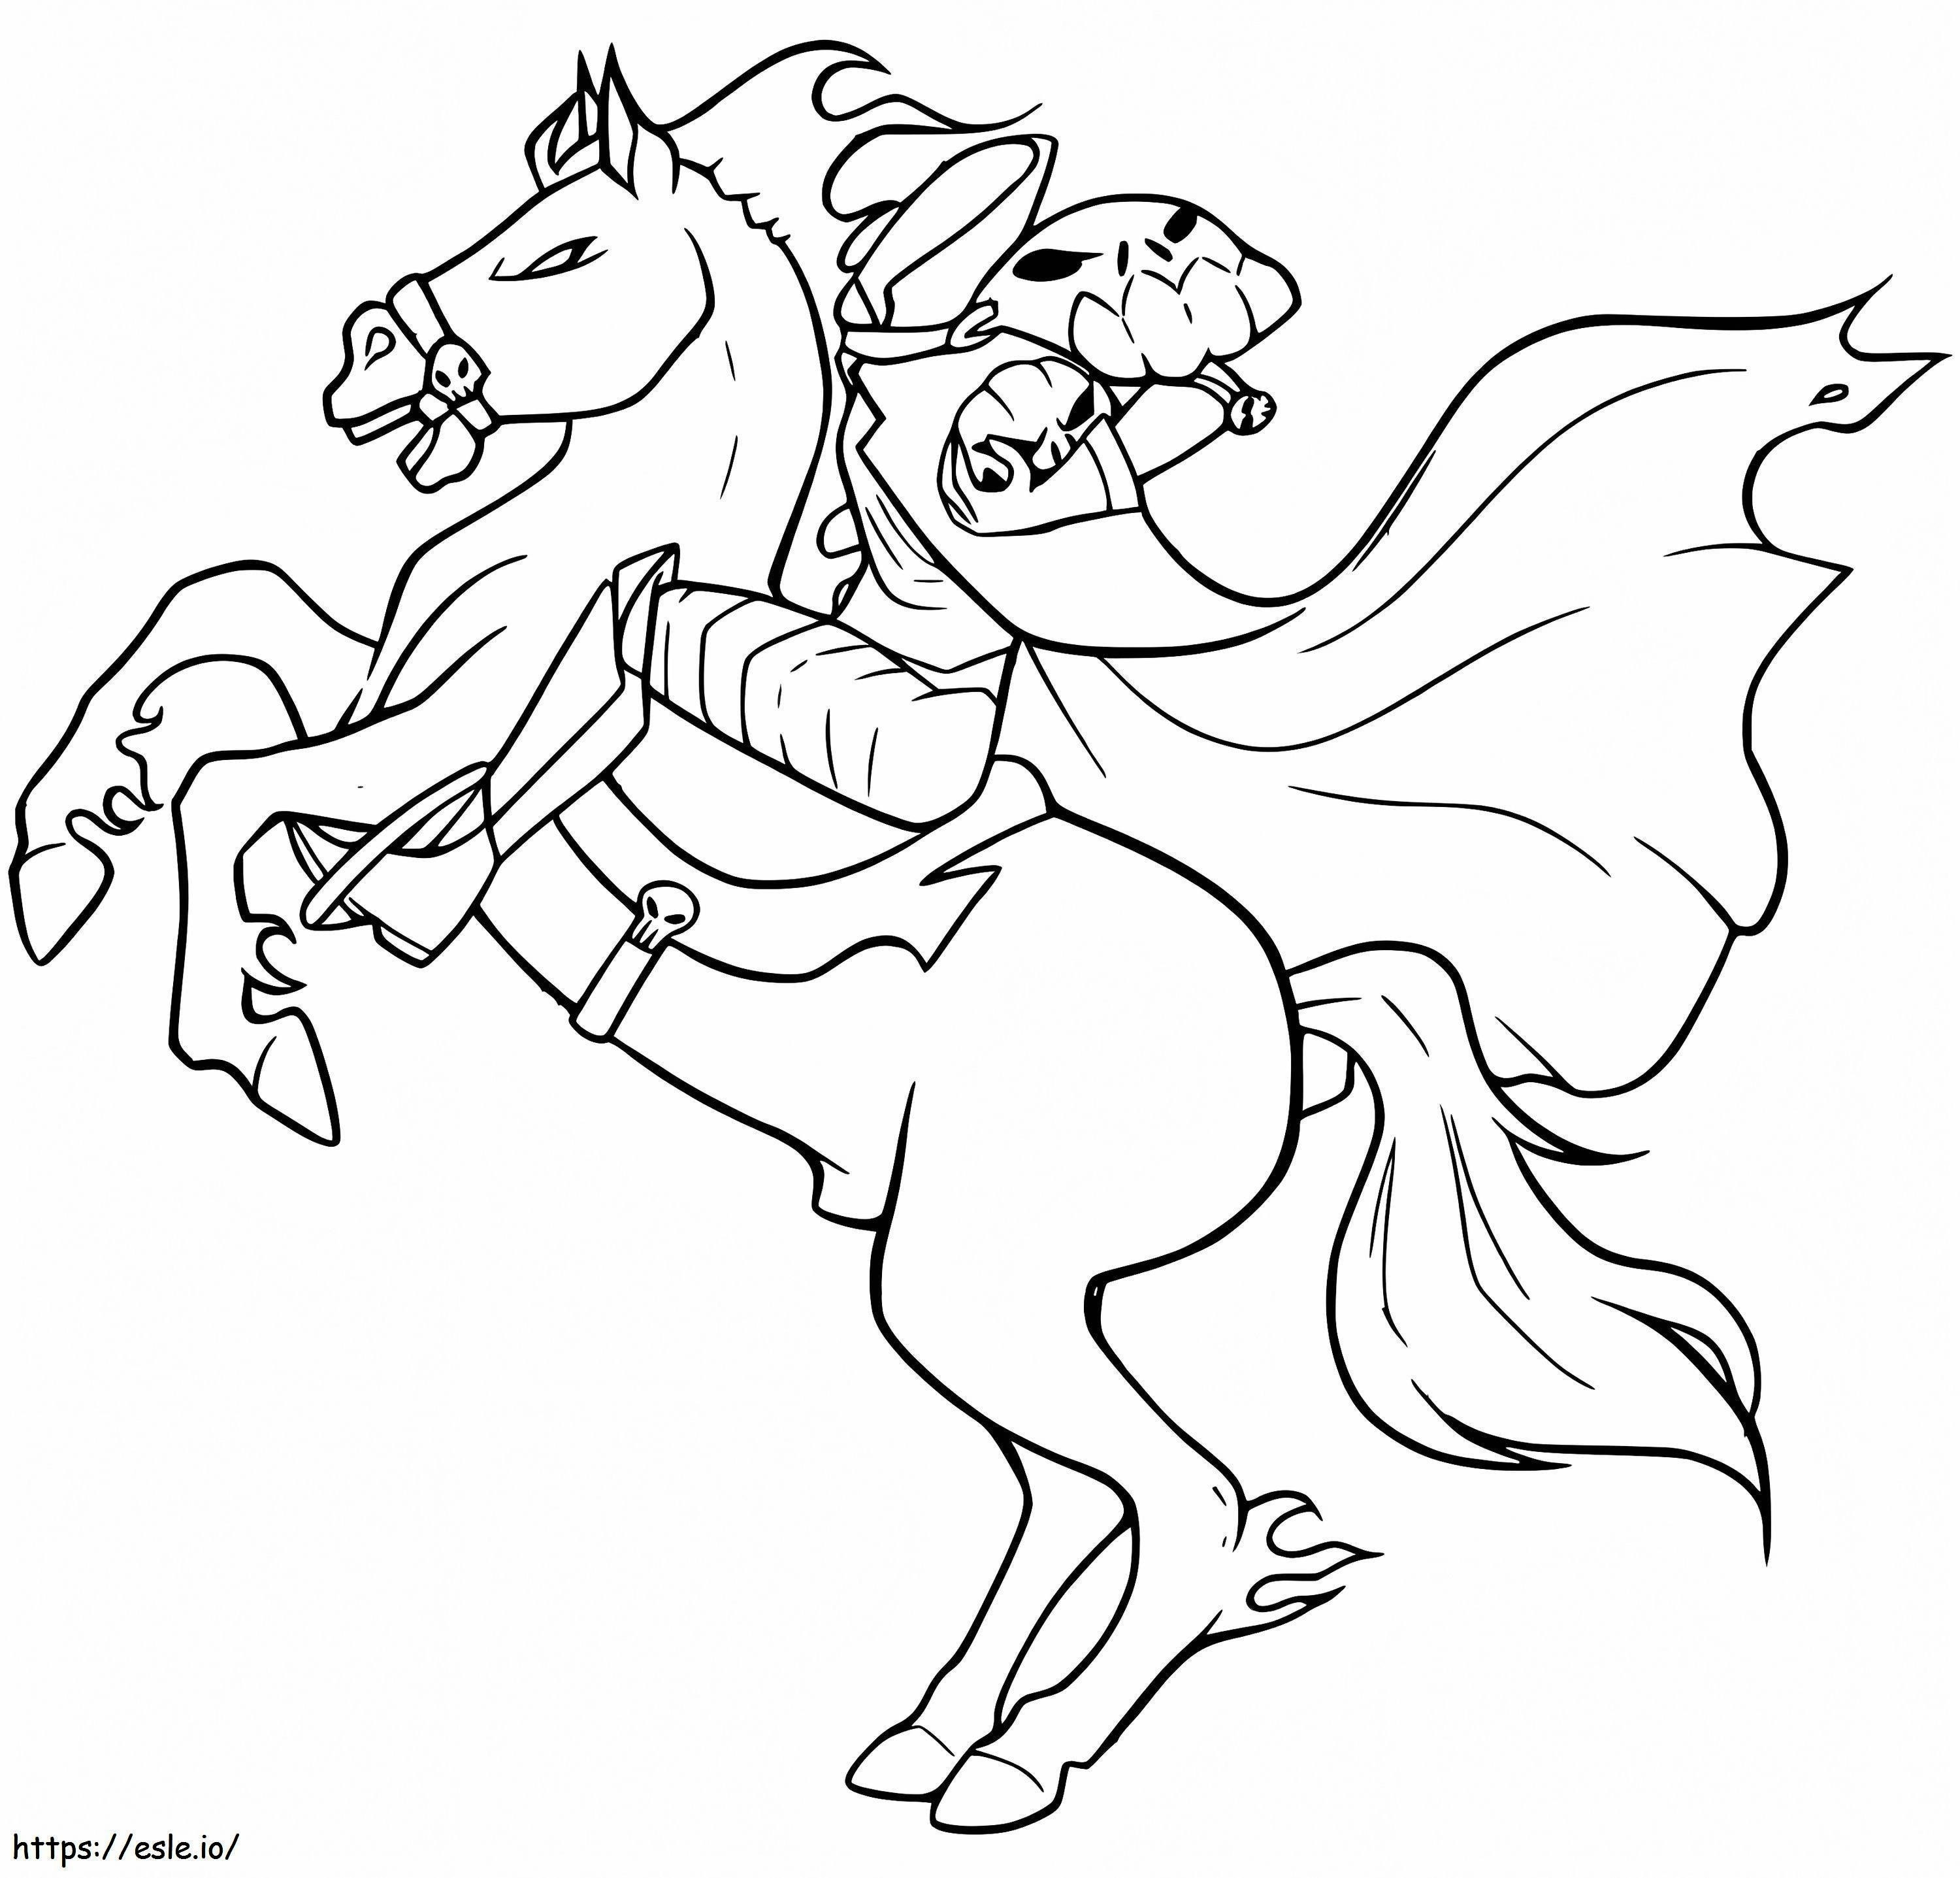 Printable Headless Horseman coloring page